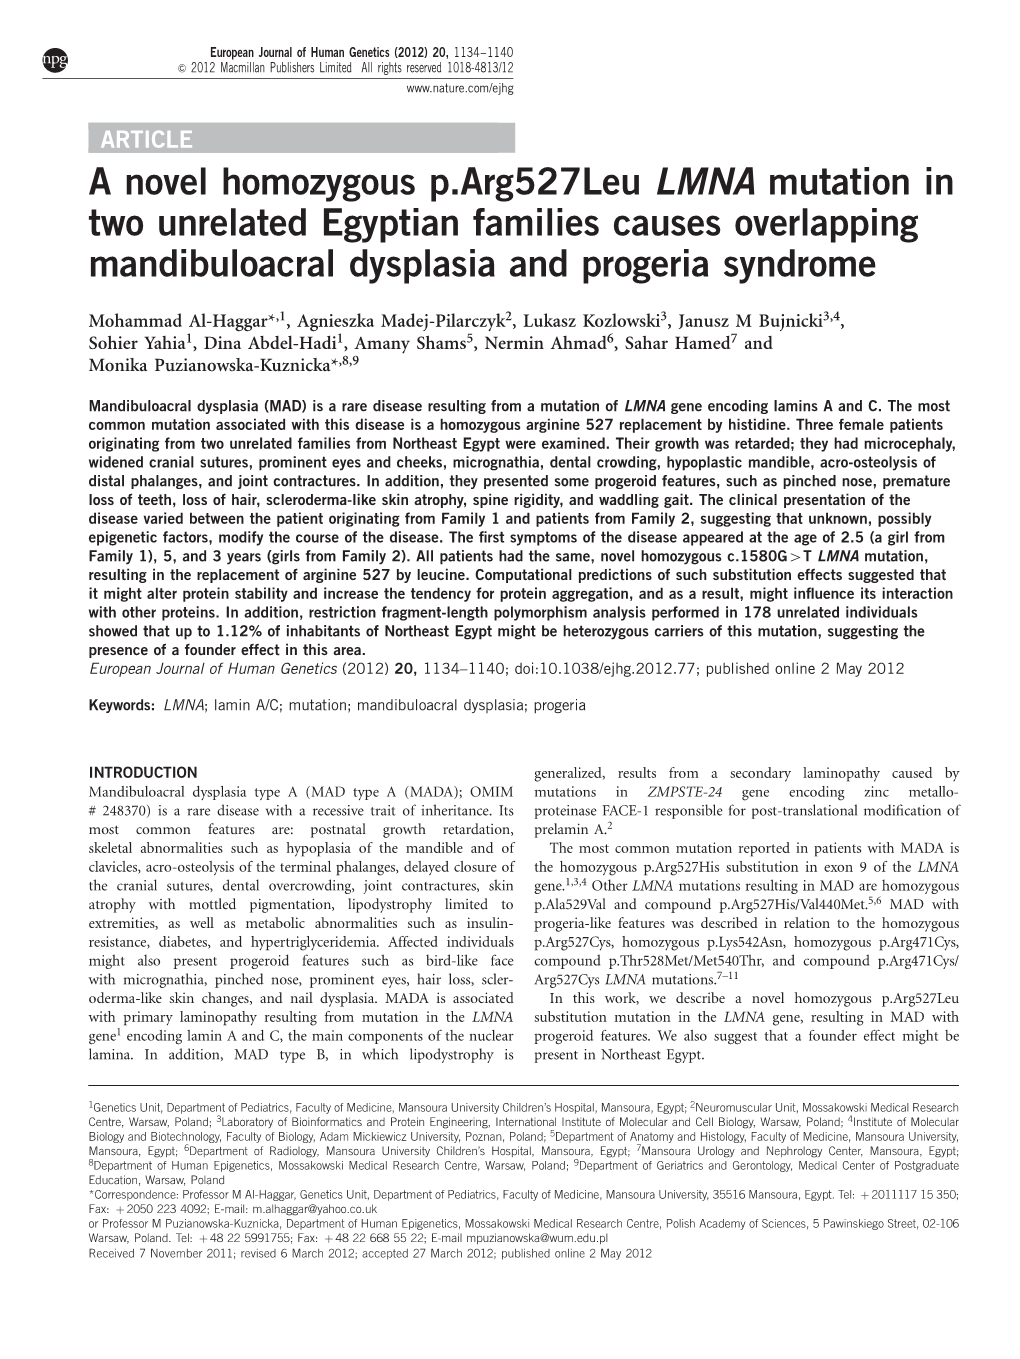 A Novel Homozygous P.Arg527leu LMNA Mutation in Two Unrelated Egyptian Families Causes Overlapping Mandibuloacral Dysplasia and Progeria Syndrome